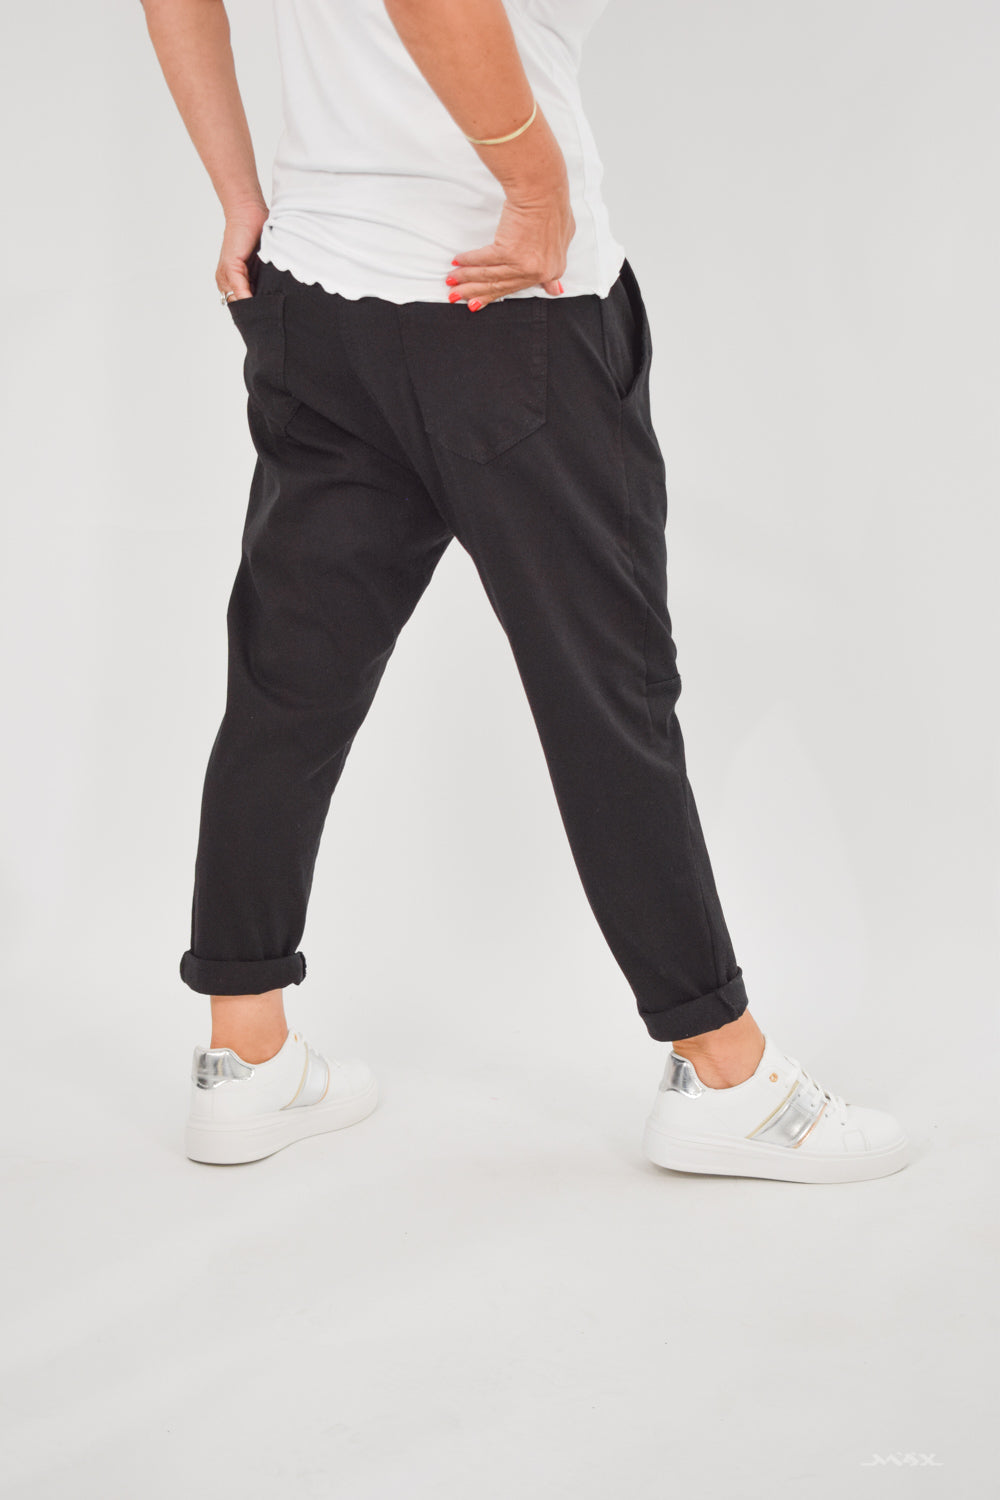 Haremshose schwarz aus stretchigem Jeans-Stoff